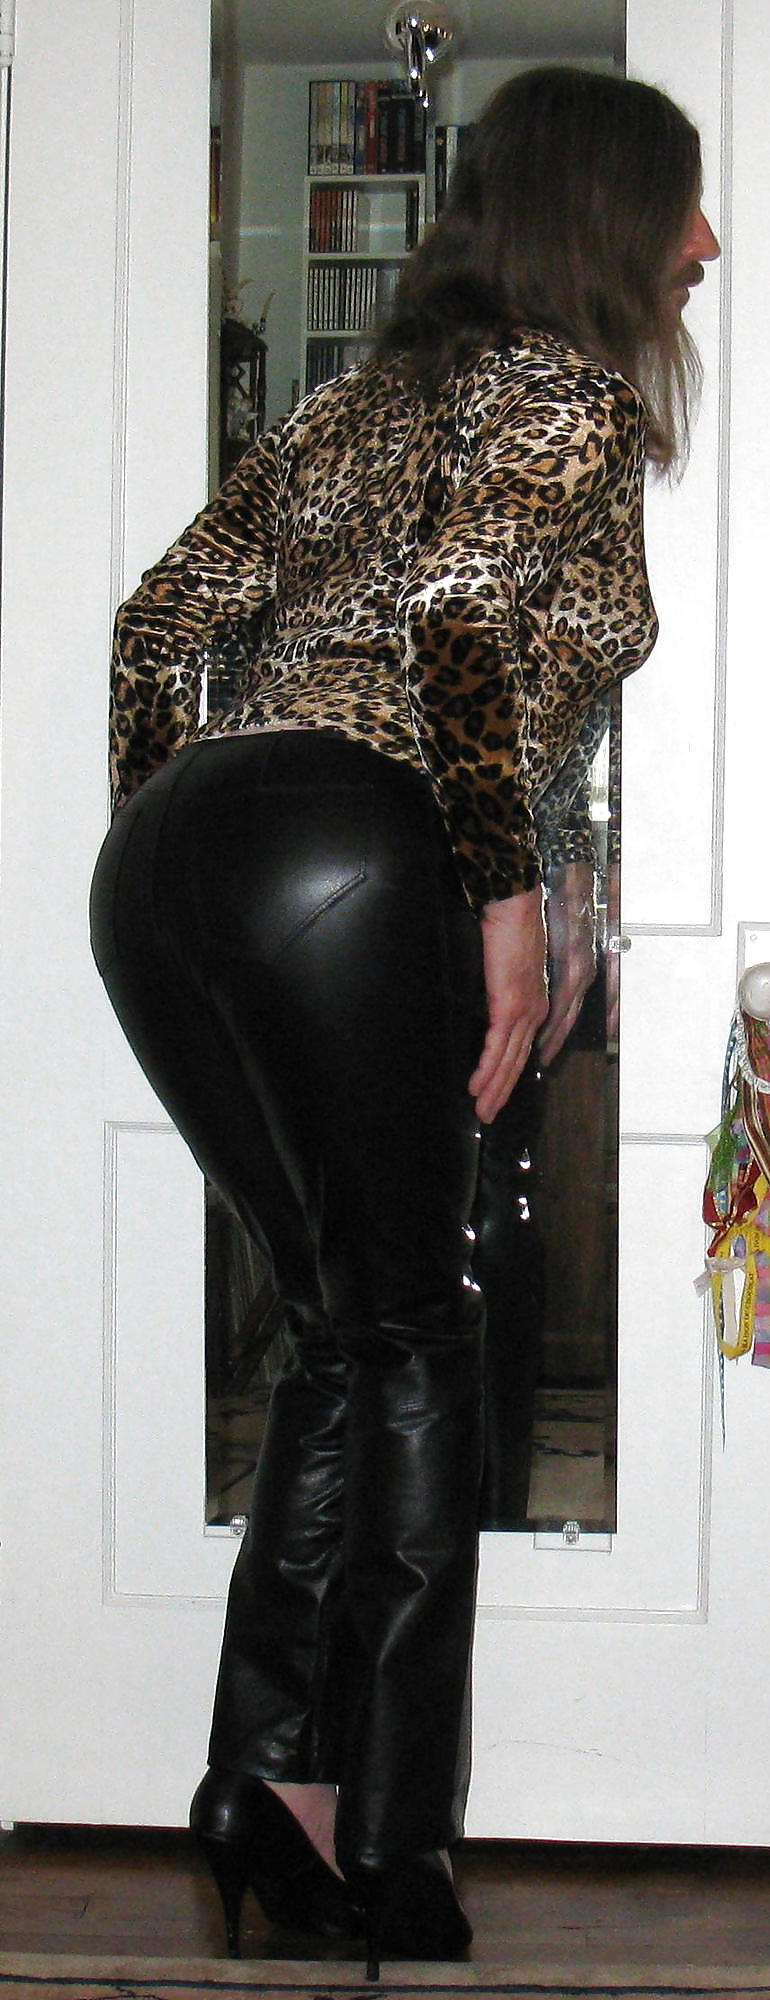 Crossdressing - ragazza leopardo
 #7202396